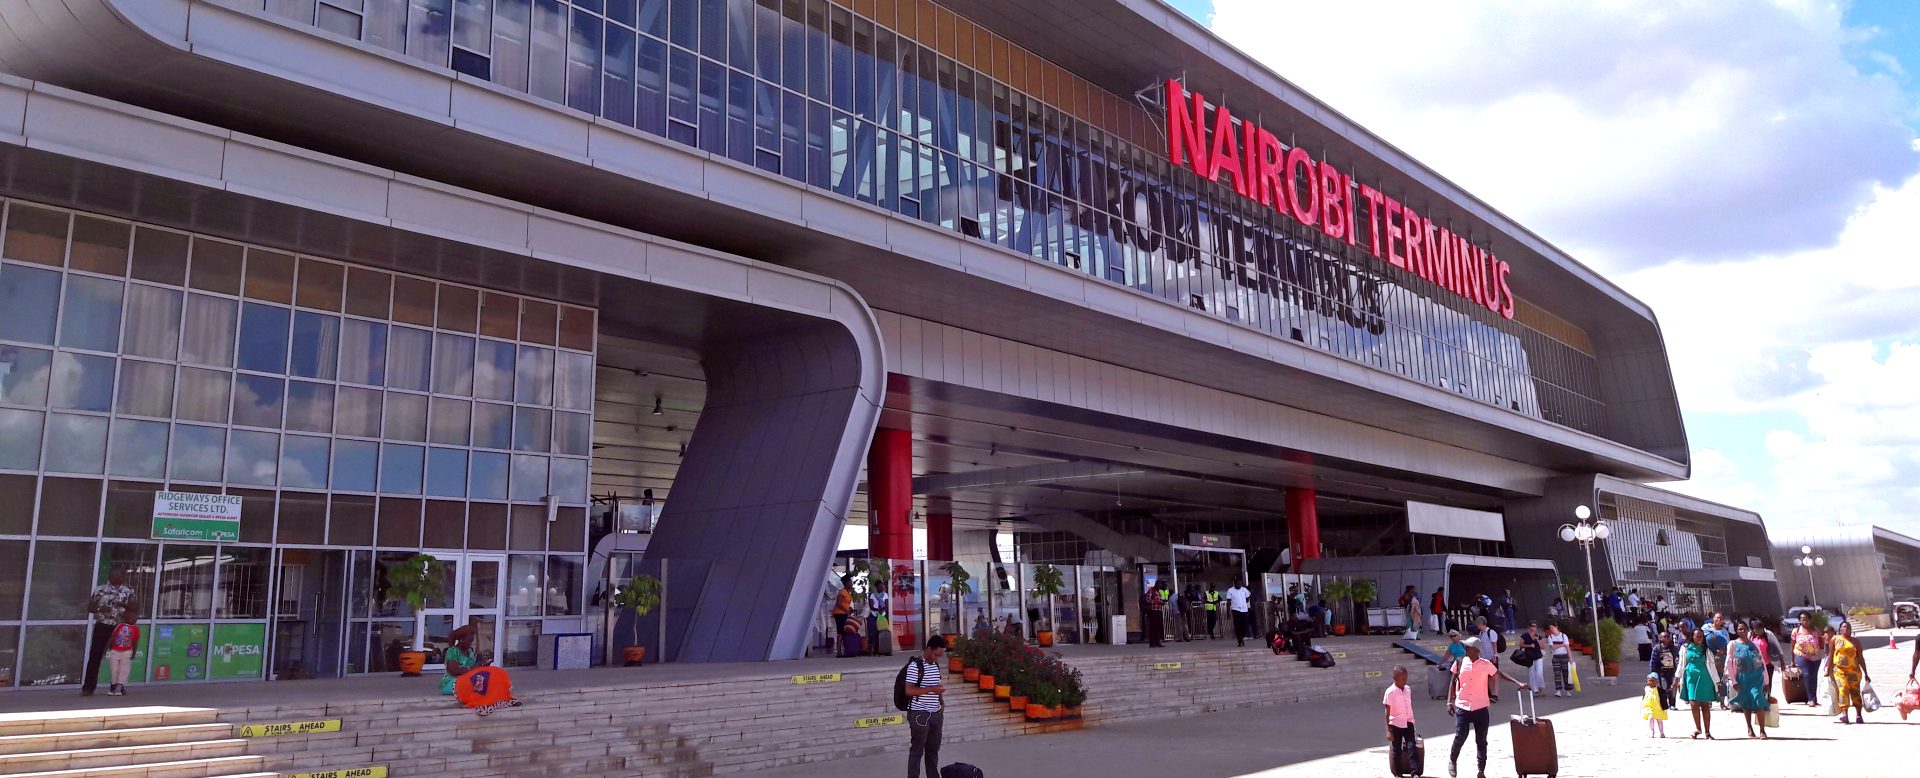 Nairobi Terminus building of the "Madaraka Express"